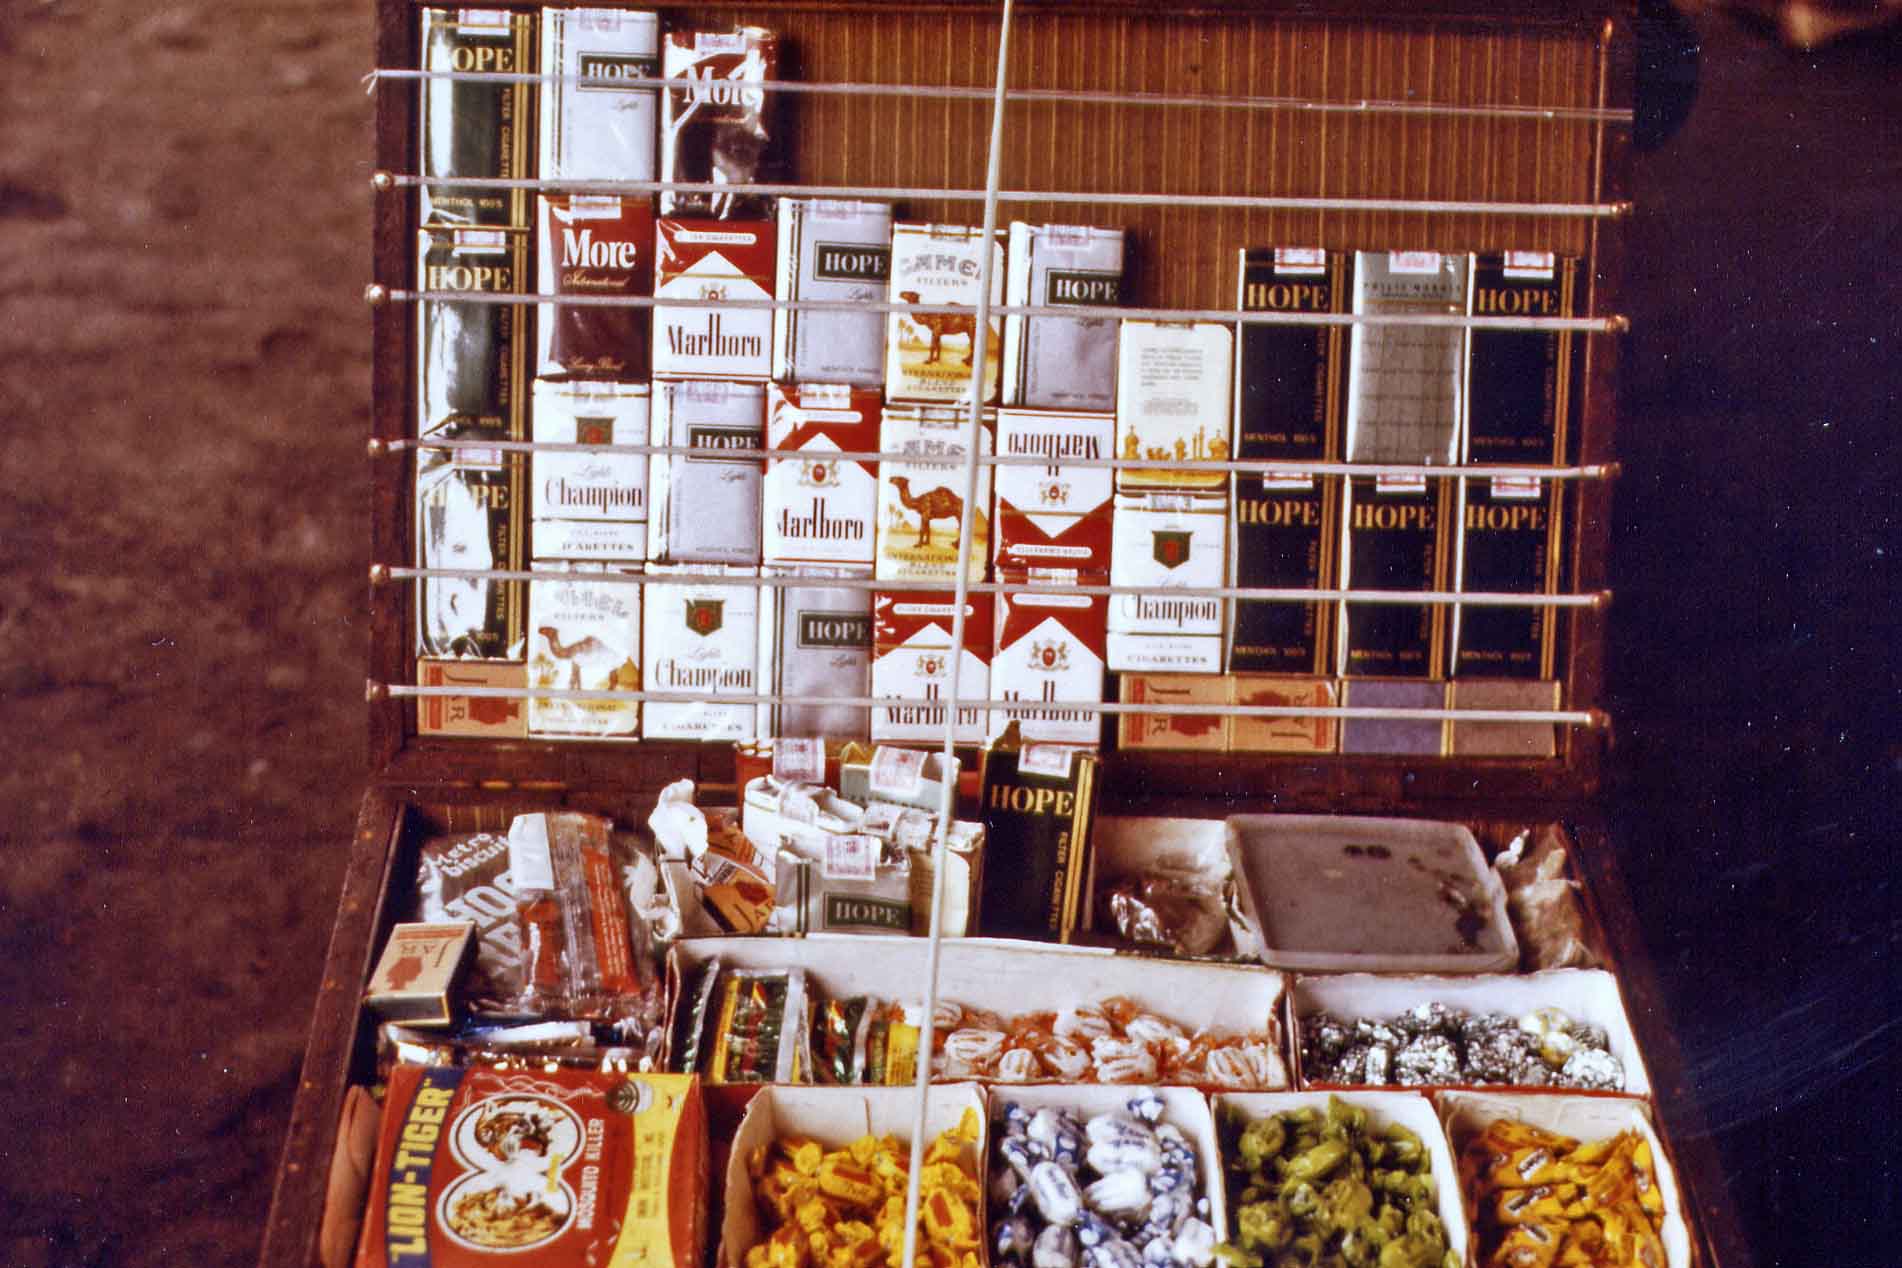 Kiosk with Cigarettes in Manila